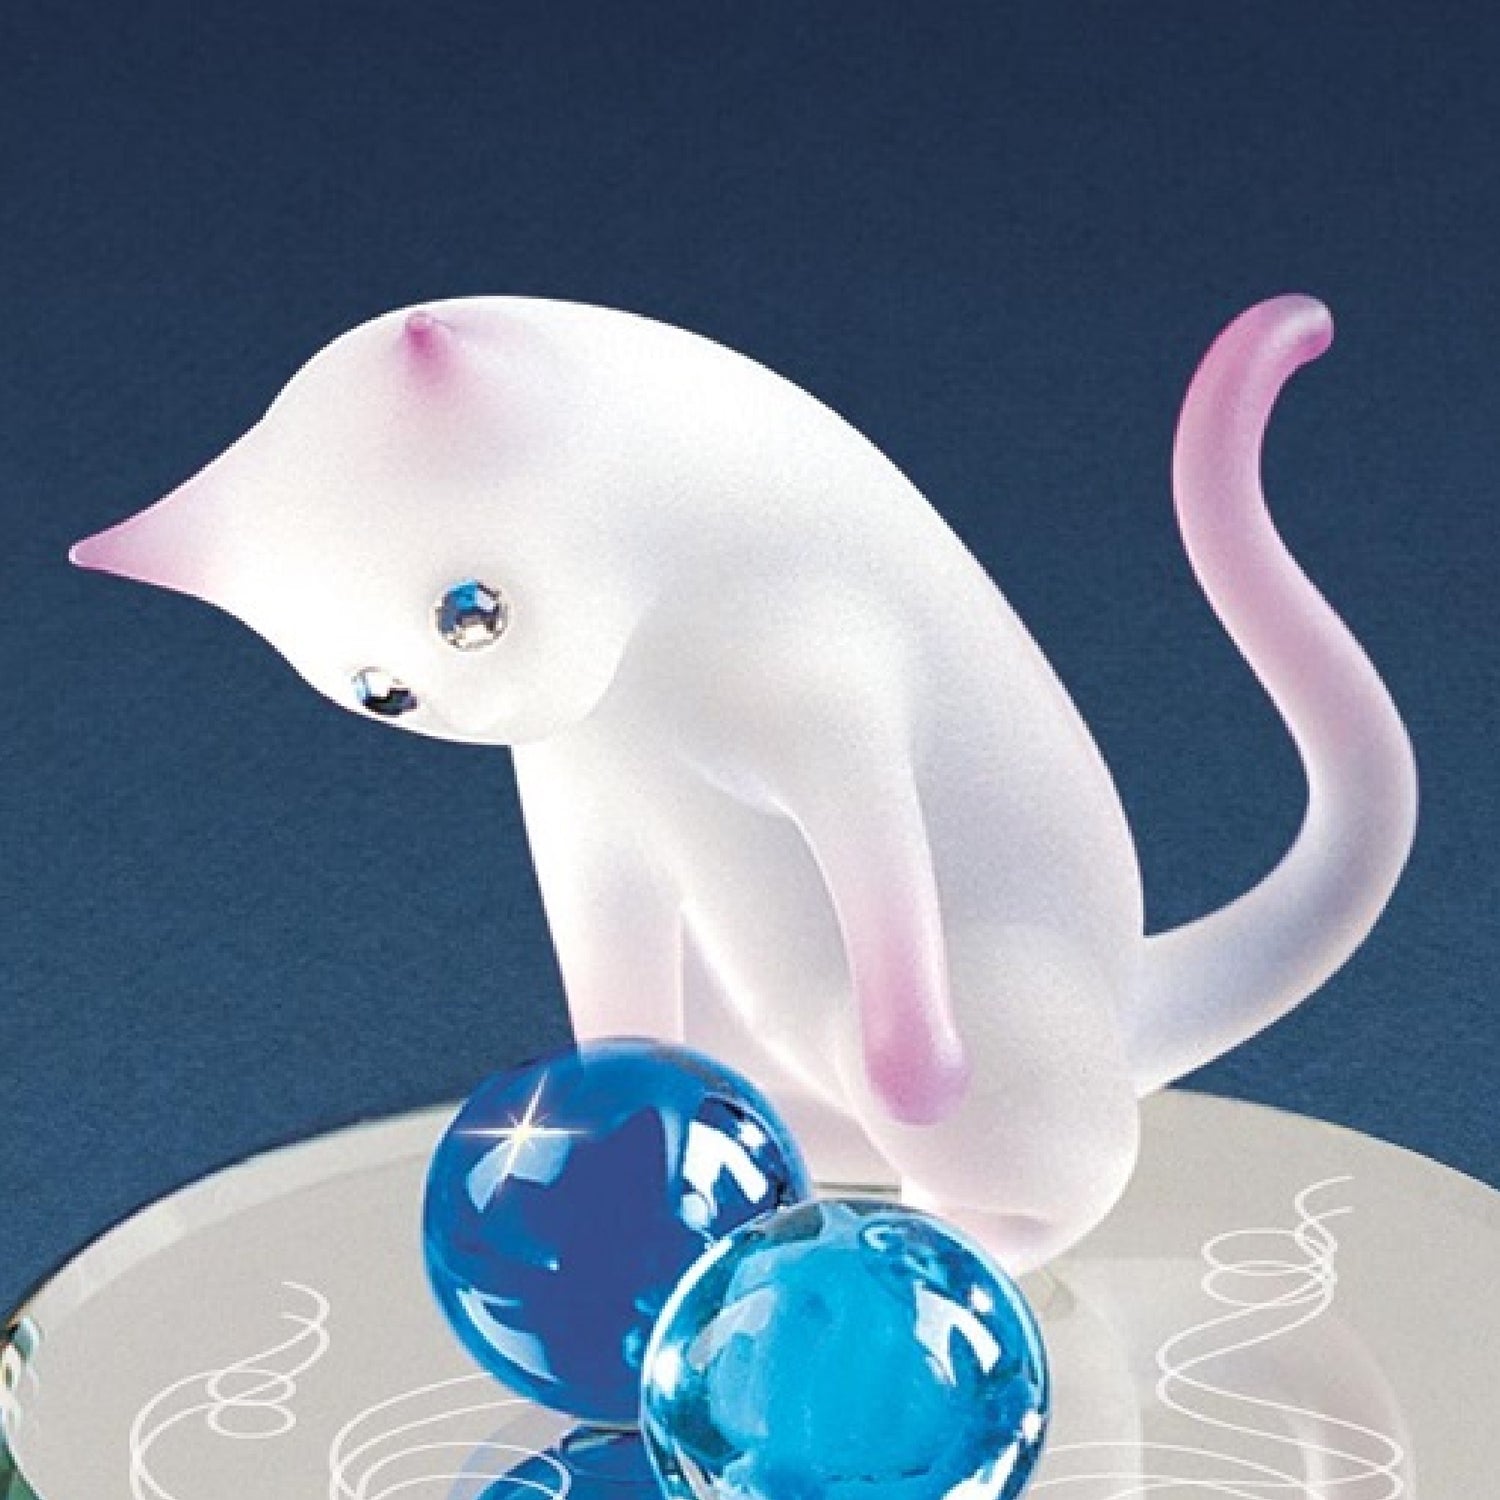 Glass Baron Curious Cat Figurine